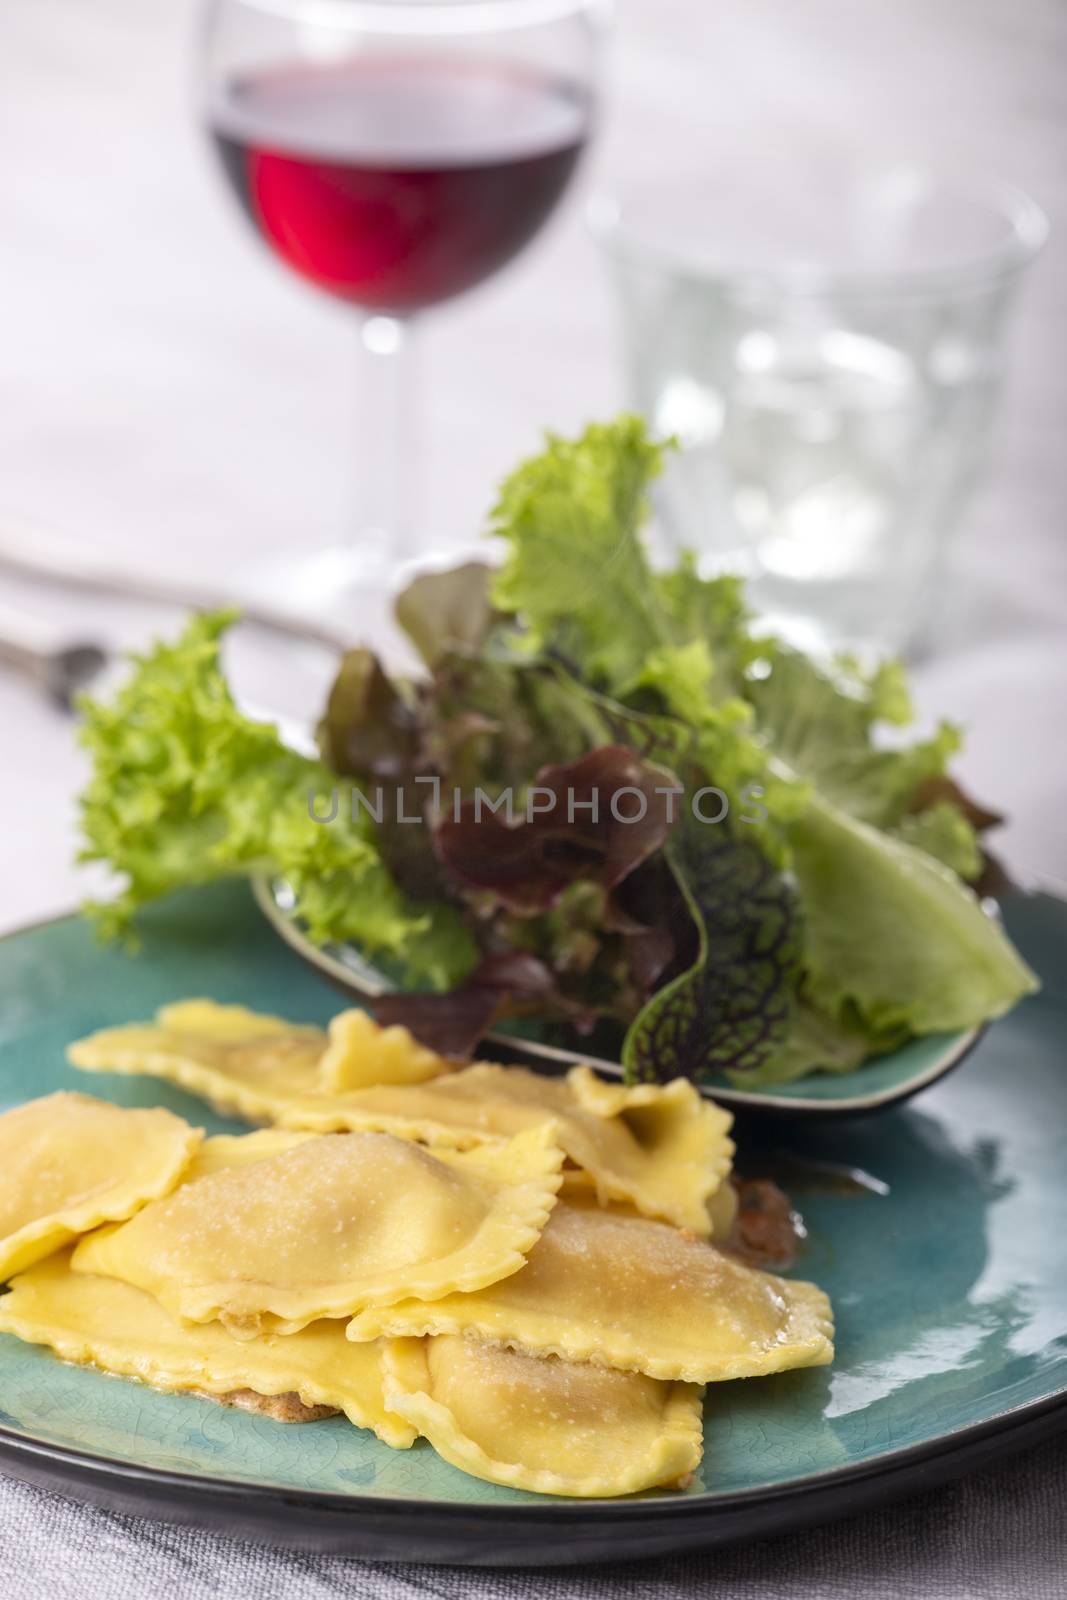 ravioli with cream sauce and salad